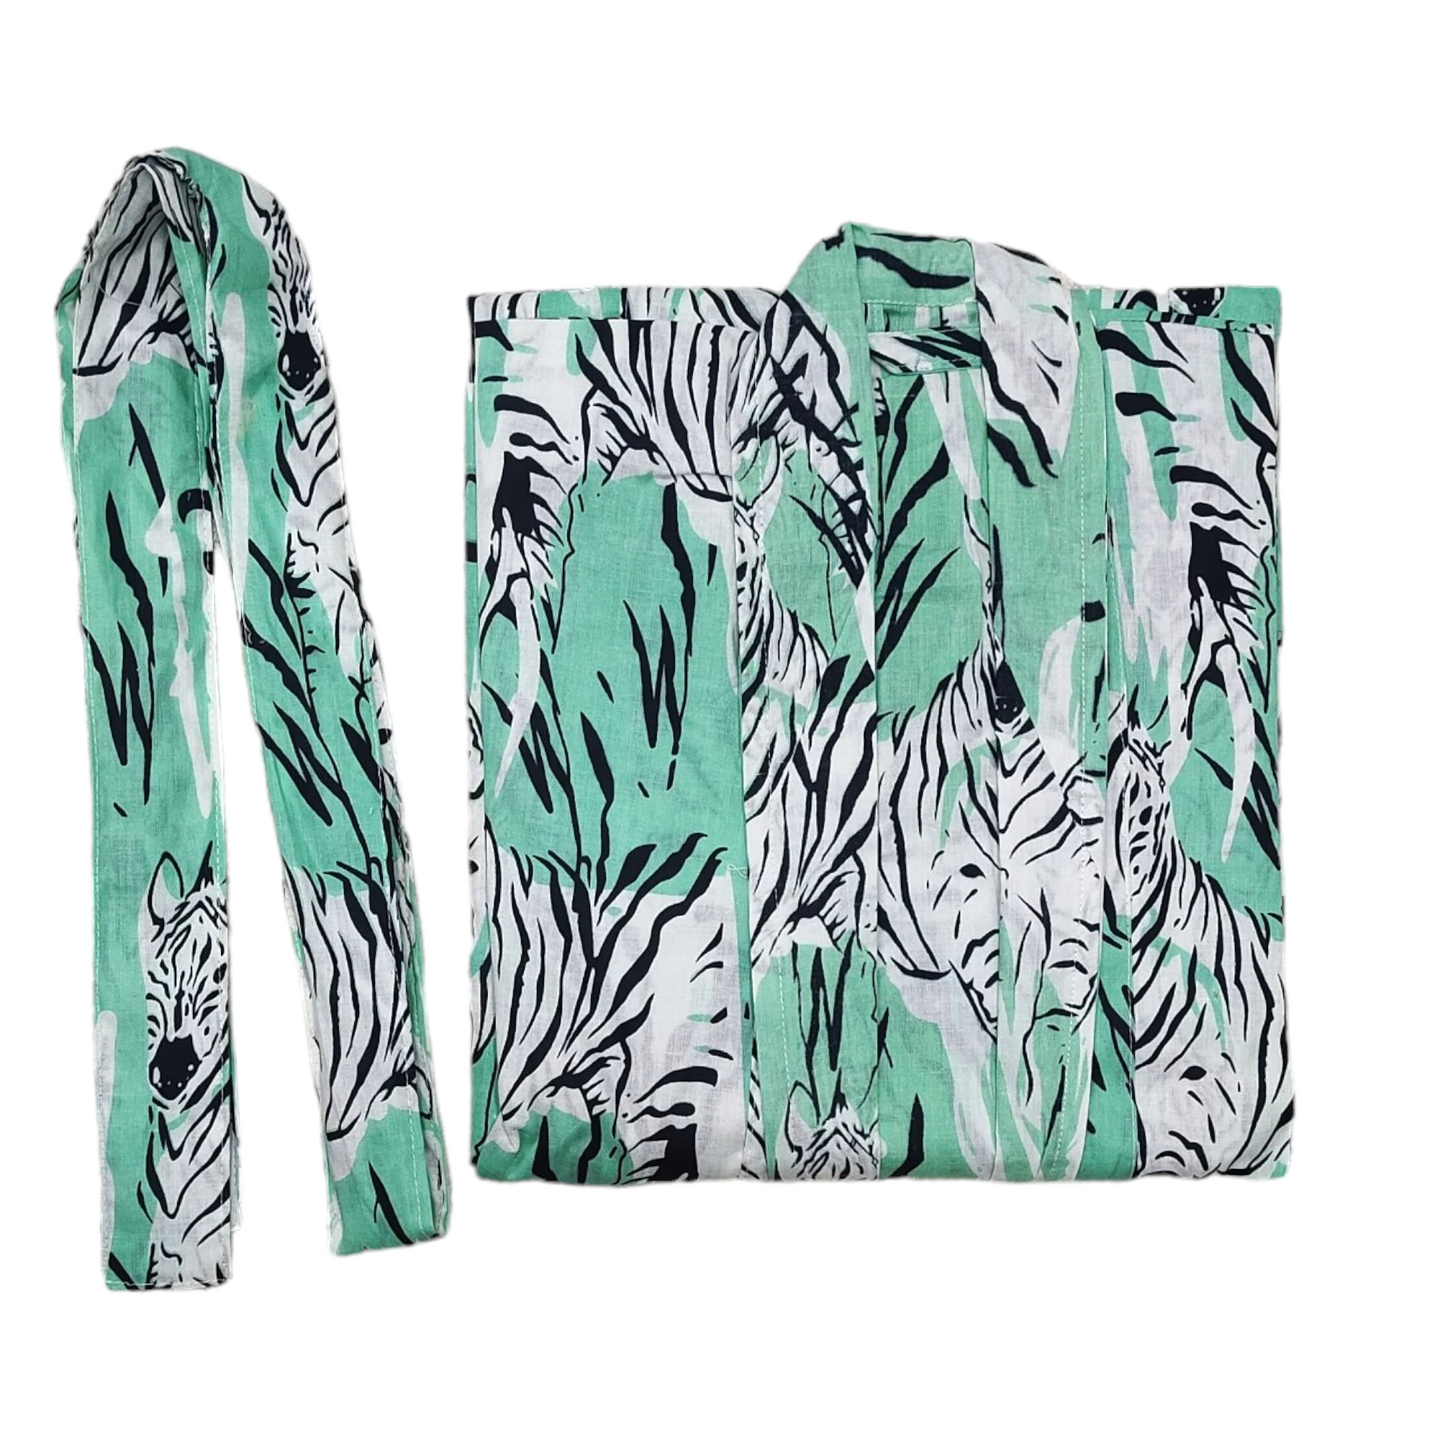 Kimono Bath Robes/ Night Suit - Zebra Green